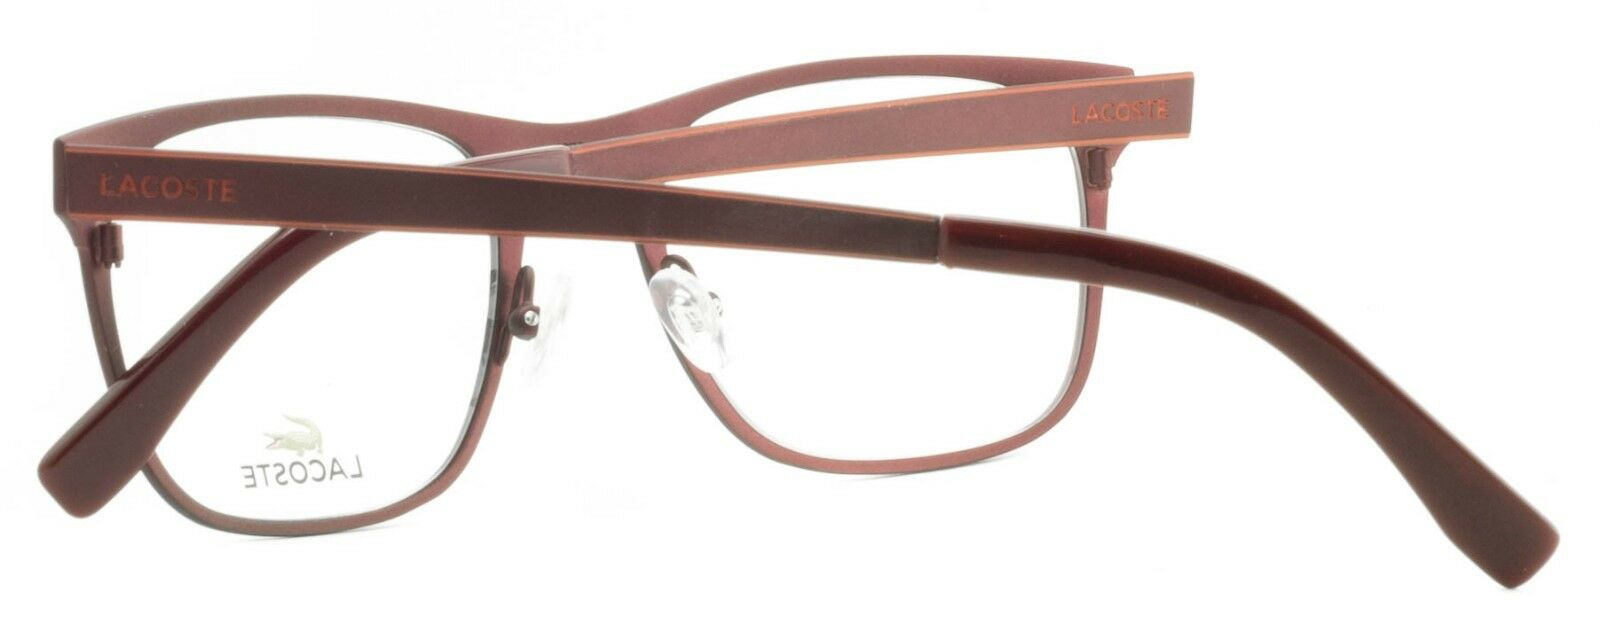 LACOSTE L2200 615 RX Optical Eyewear FRAMES NEW Glasses Eyeglasses BNIB -TRUSTED